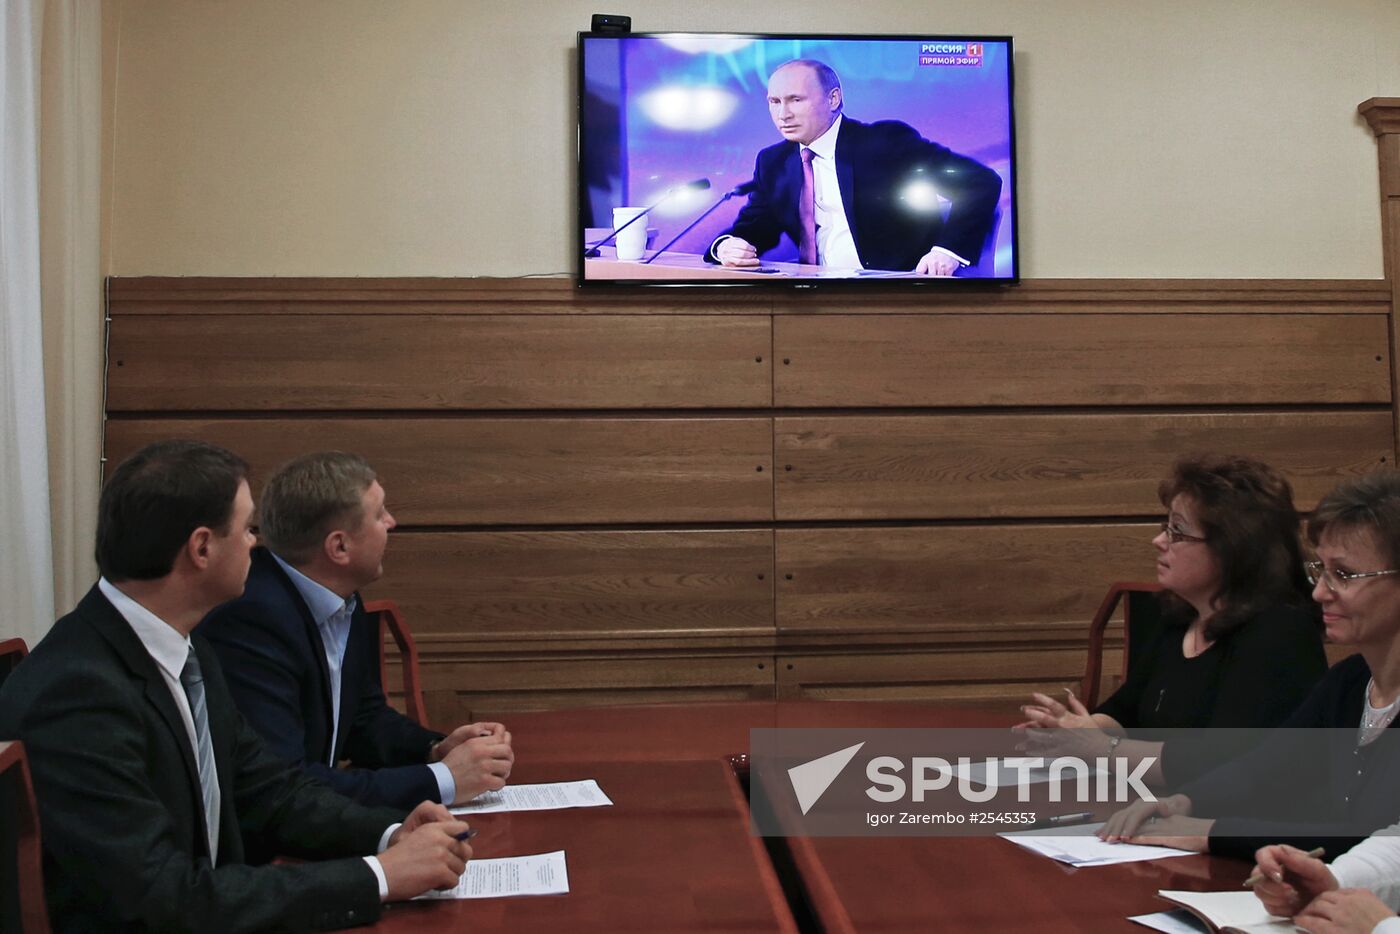 TV broadcast of Putin's news conference